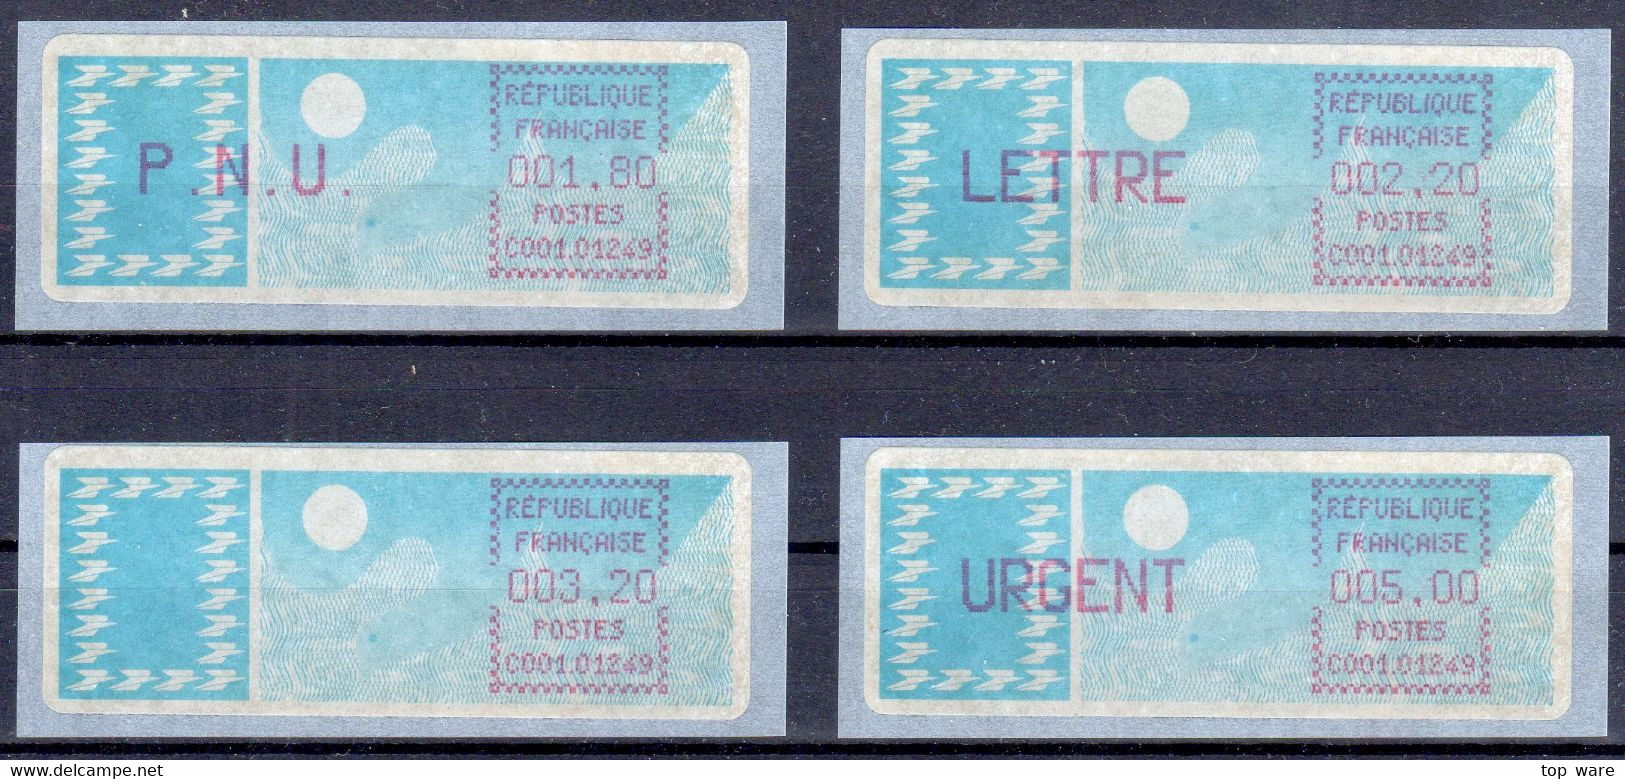 France ATM Stamps C001.01249 Michel 6.3 Xd Series ZS2 Neuf / MNH / Crouzet LSA Distributeurs Automatenmarken Frama Lisa - 1985 « Carrier » Paper